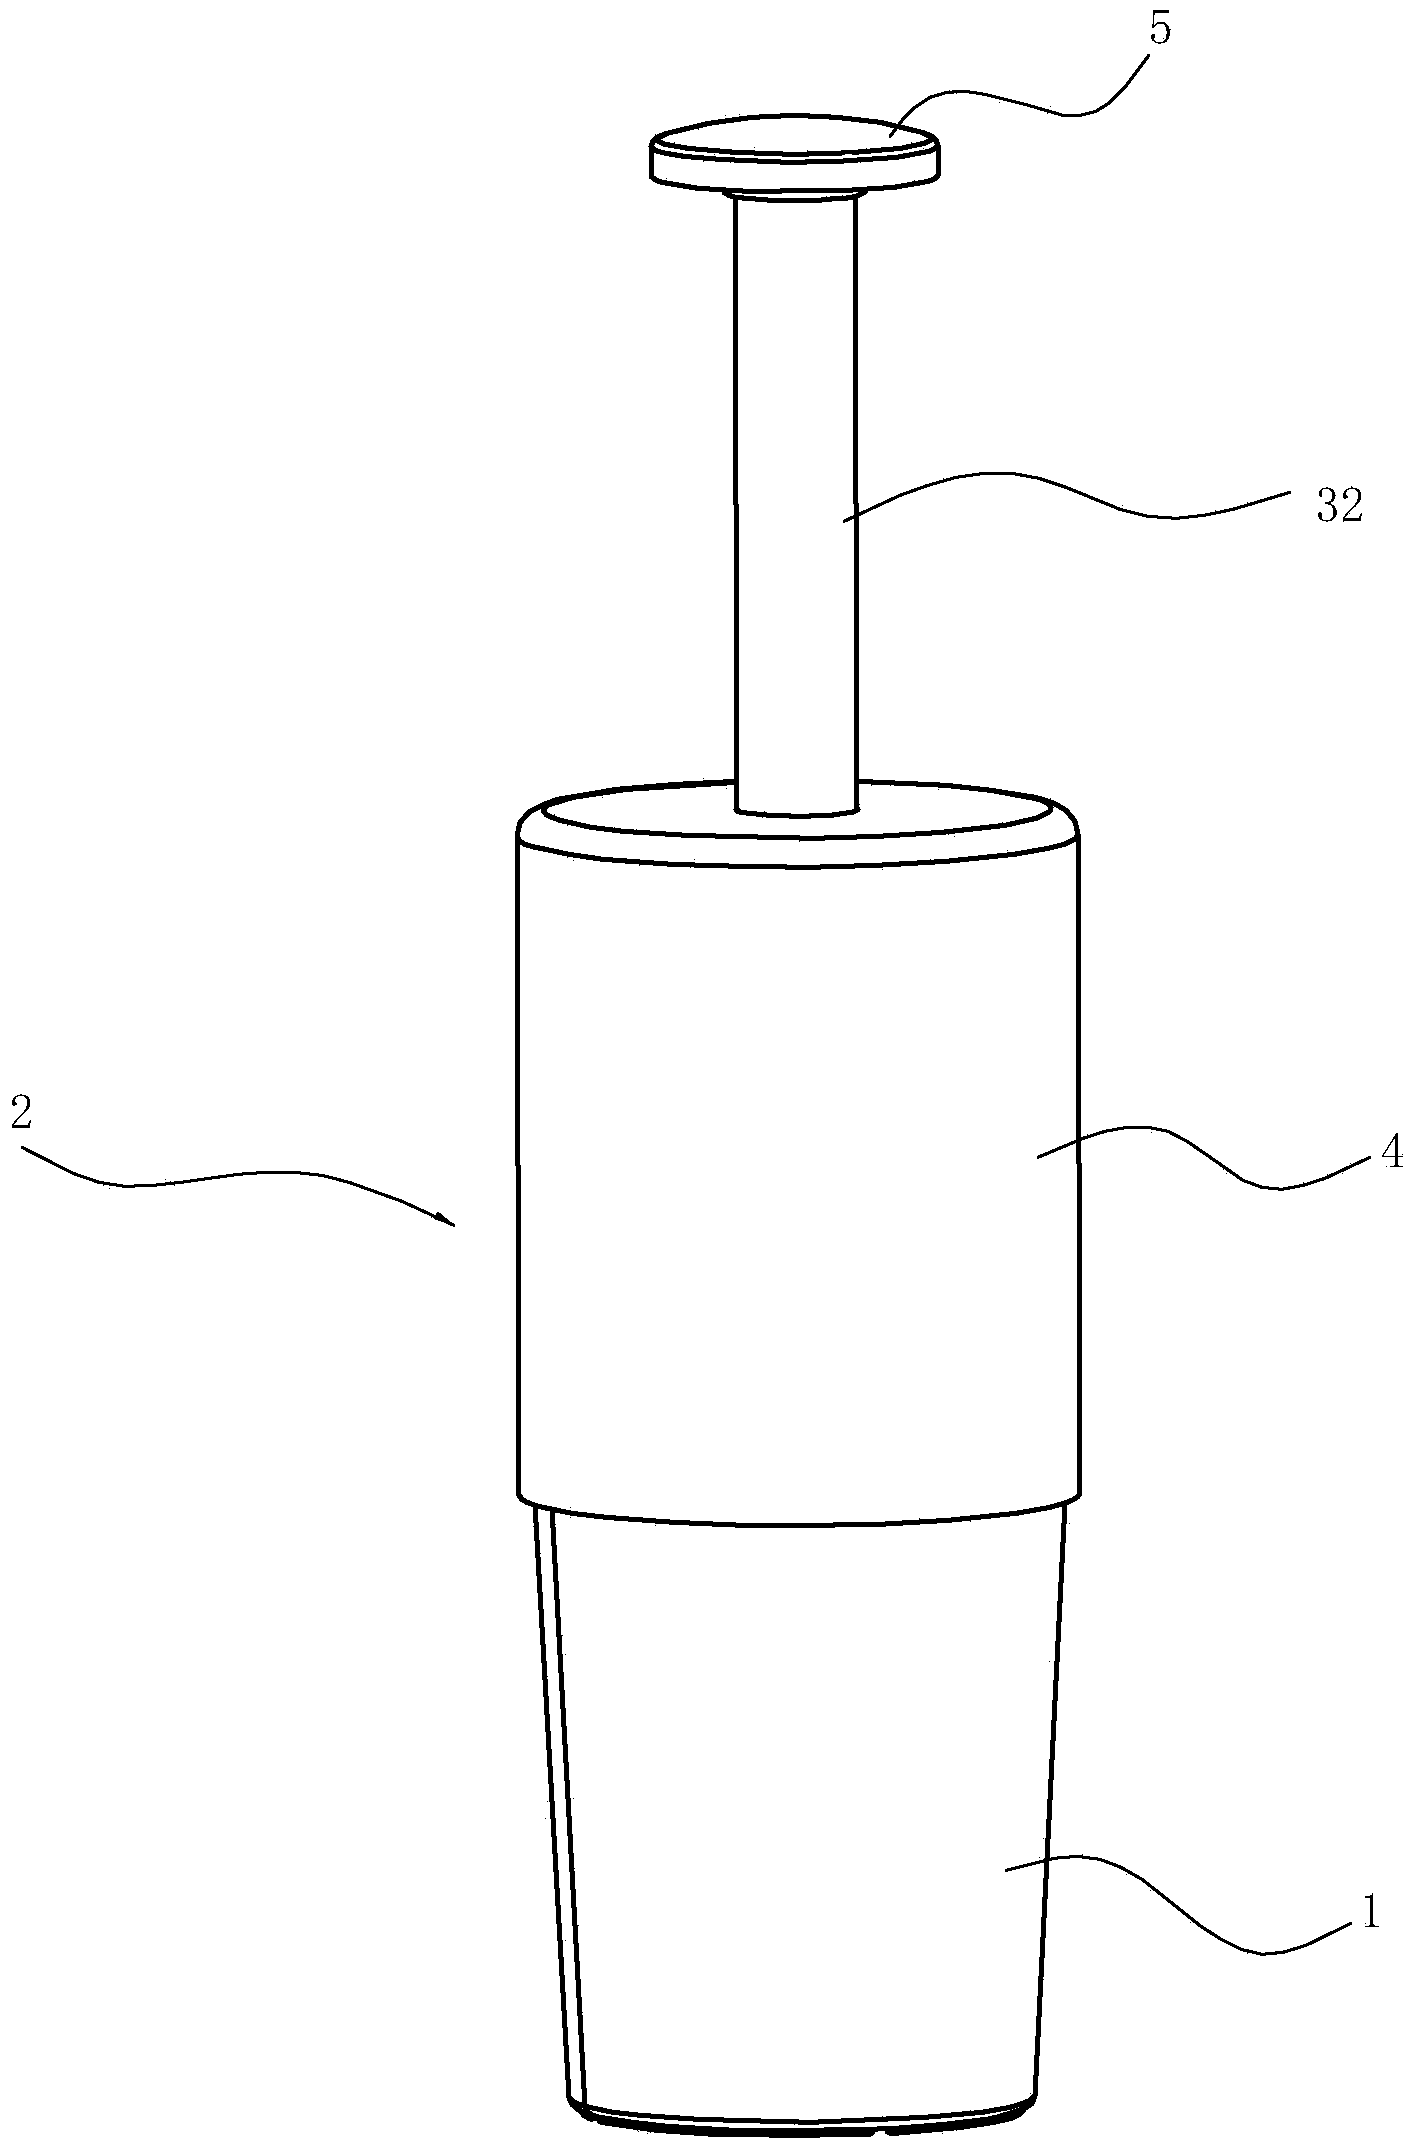 Juicer structure